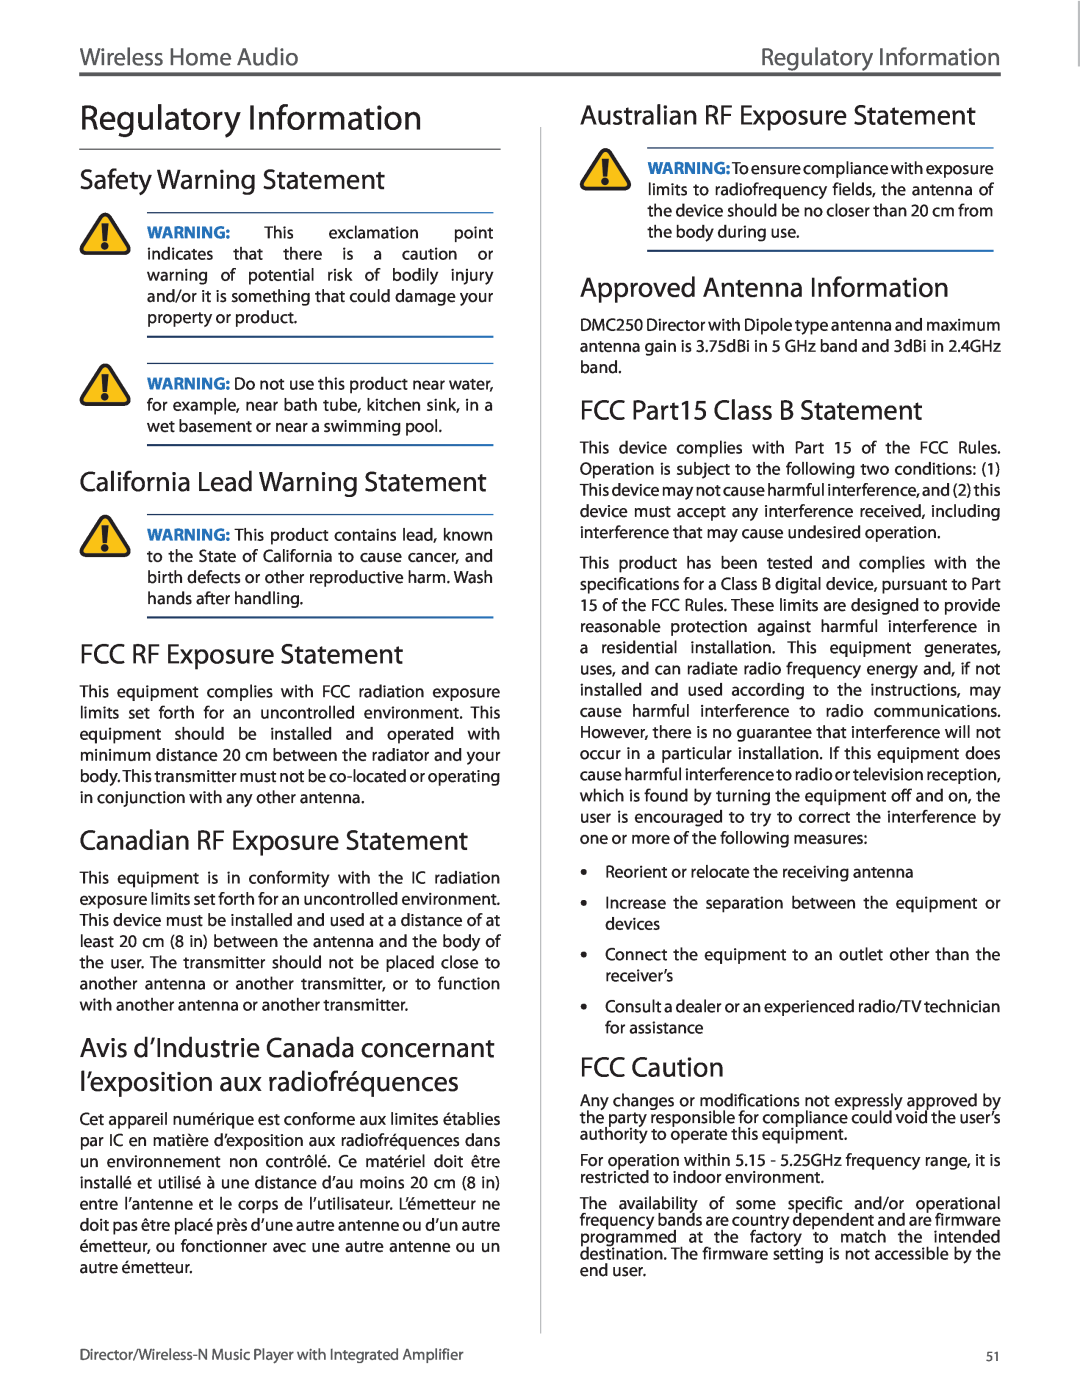 Linksys DMC250 manual Regulatory Information, Safety Warning Statement, California Lead Warning Statement, FCC Caution 